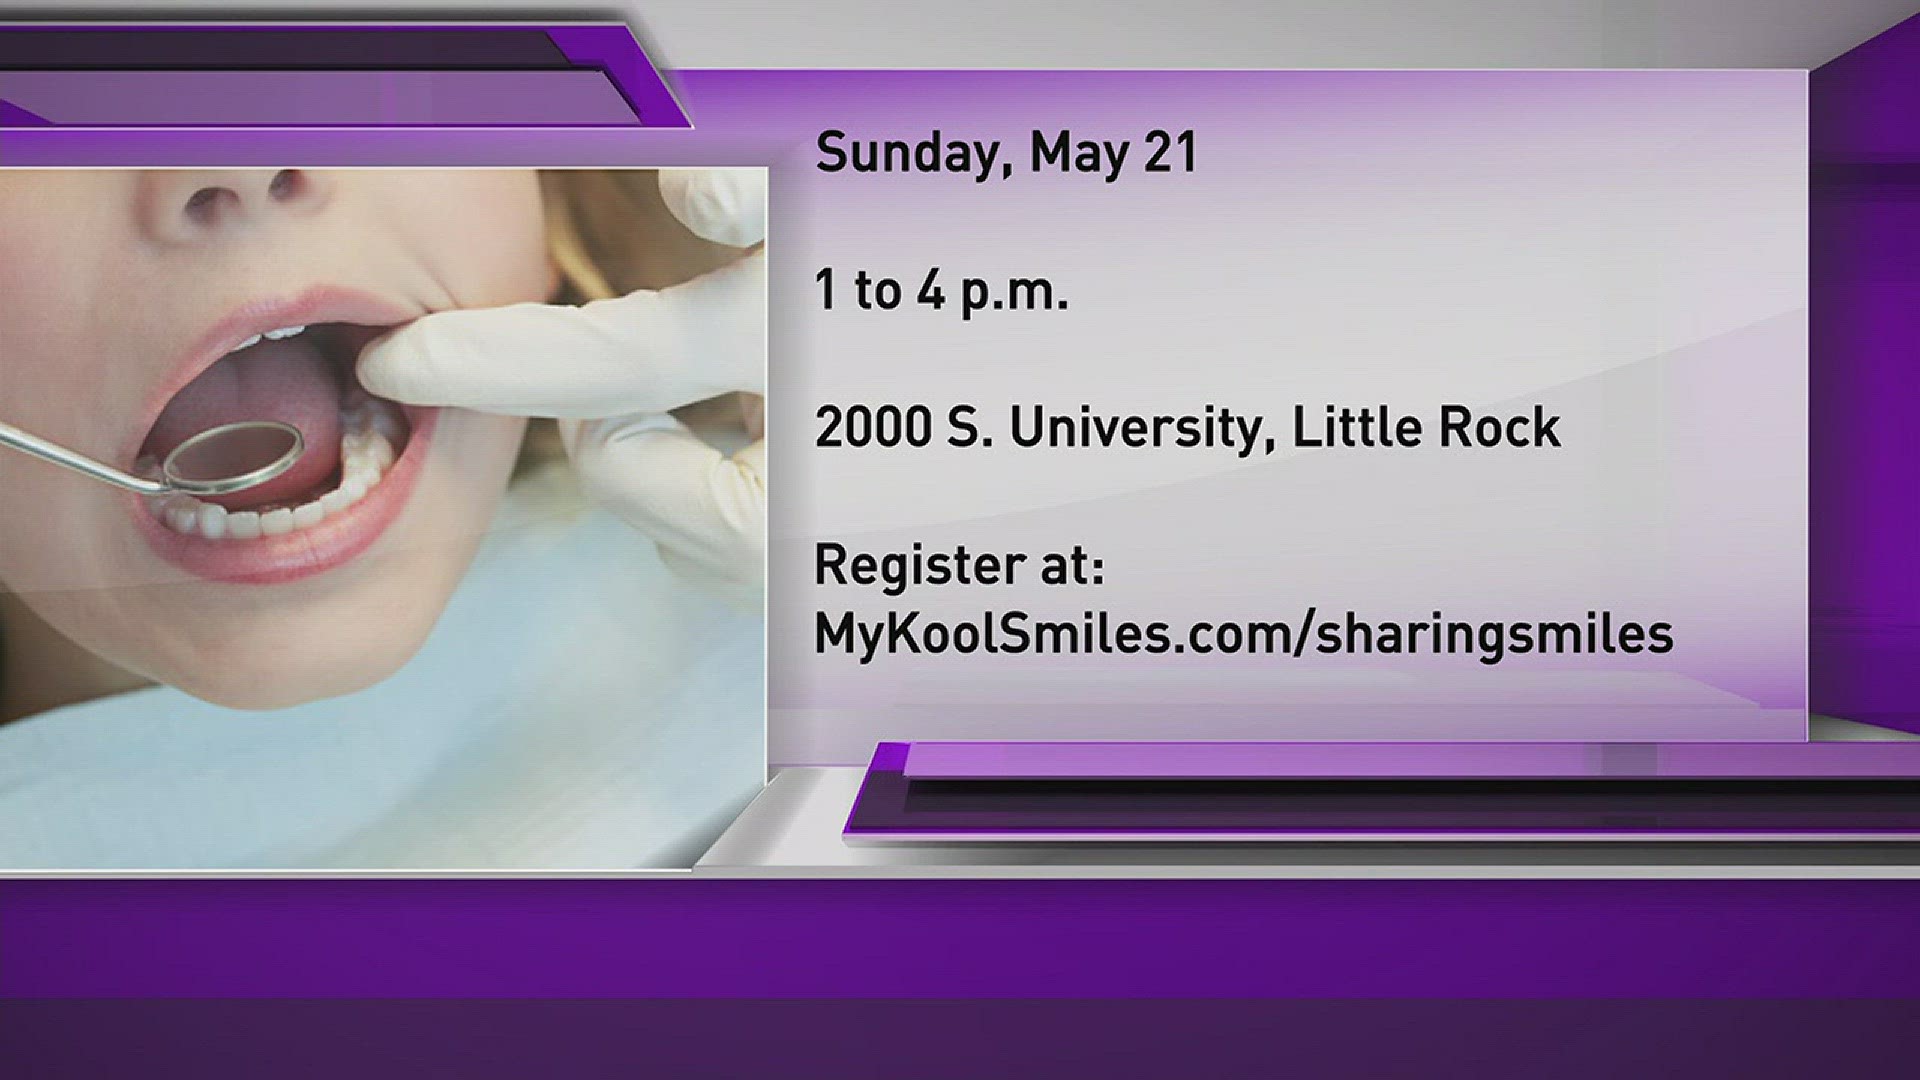 Kool Smiles' hosting their 3rd annual "Sharing Smiles" this weekend.